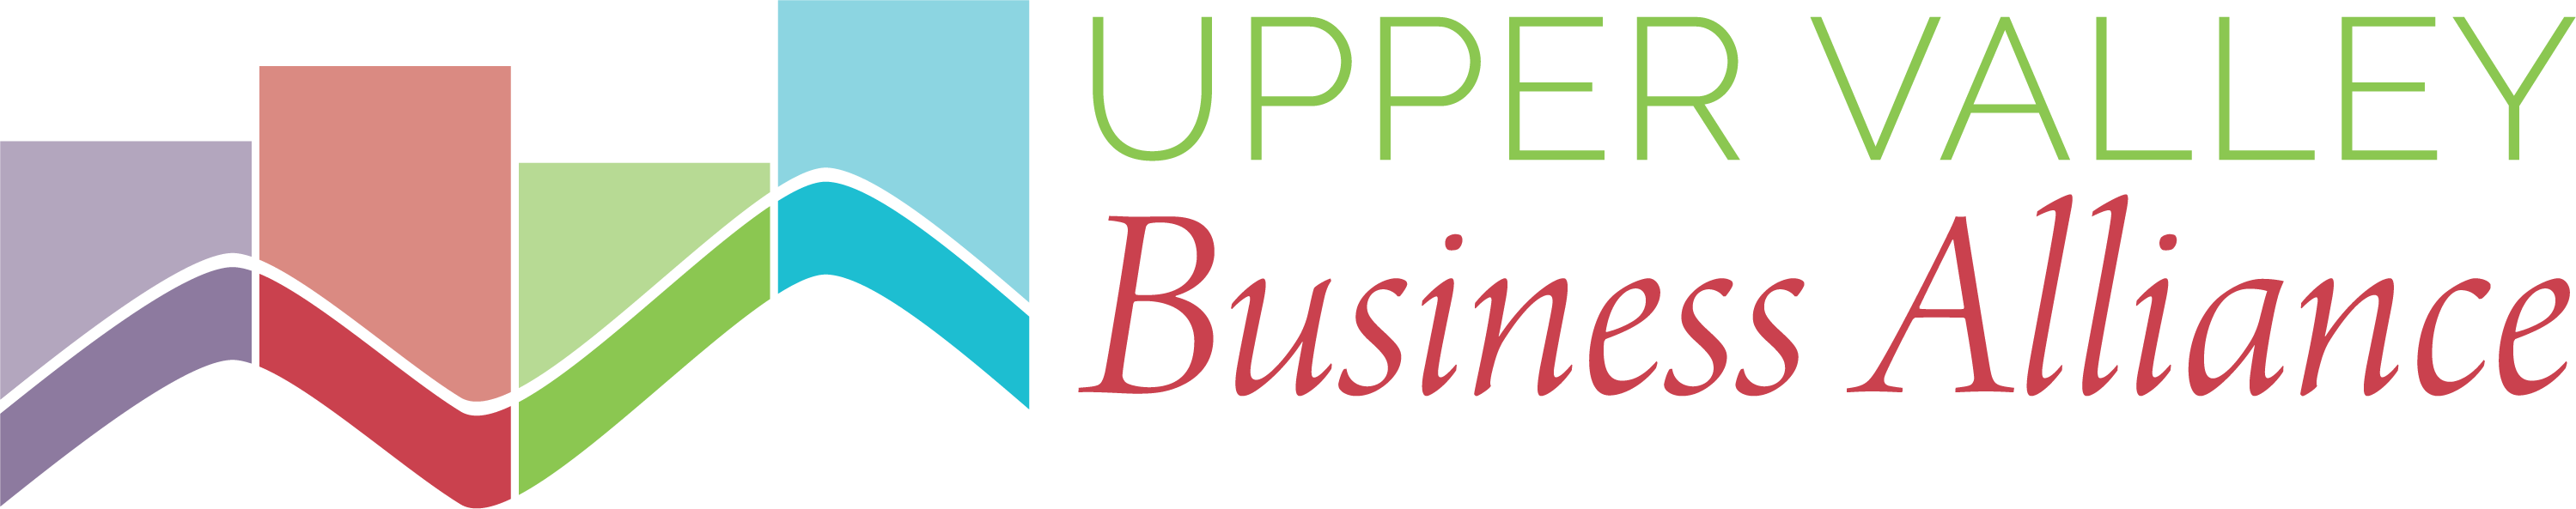 Upper Valley Business Alliance Horizontal logo